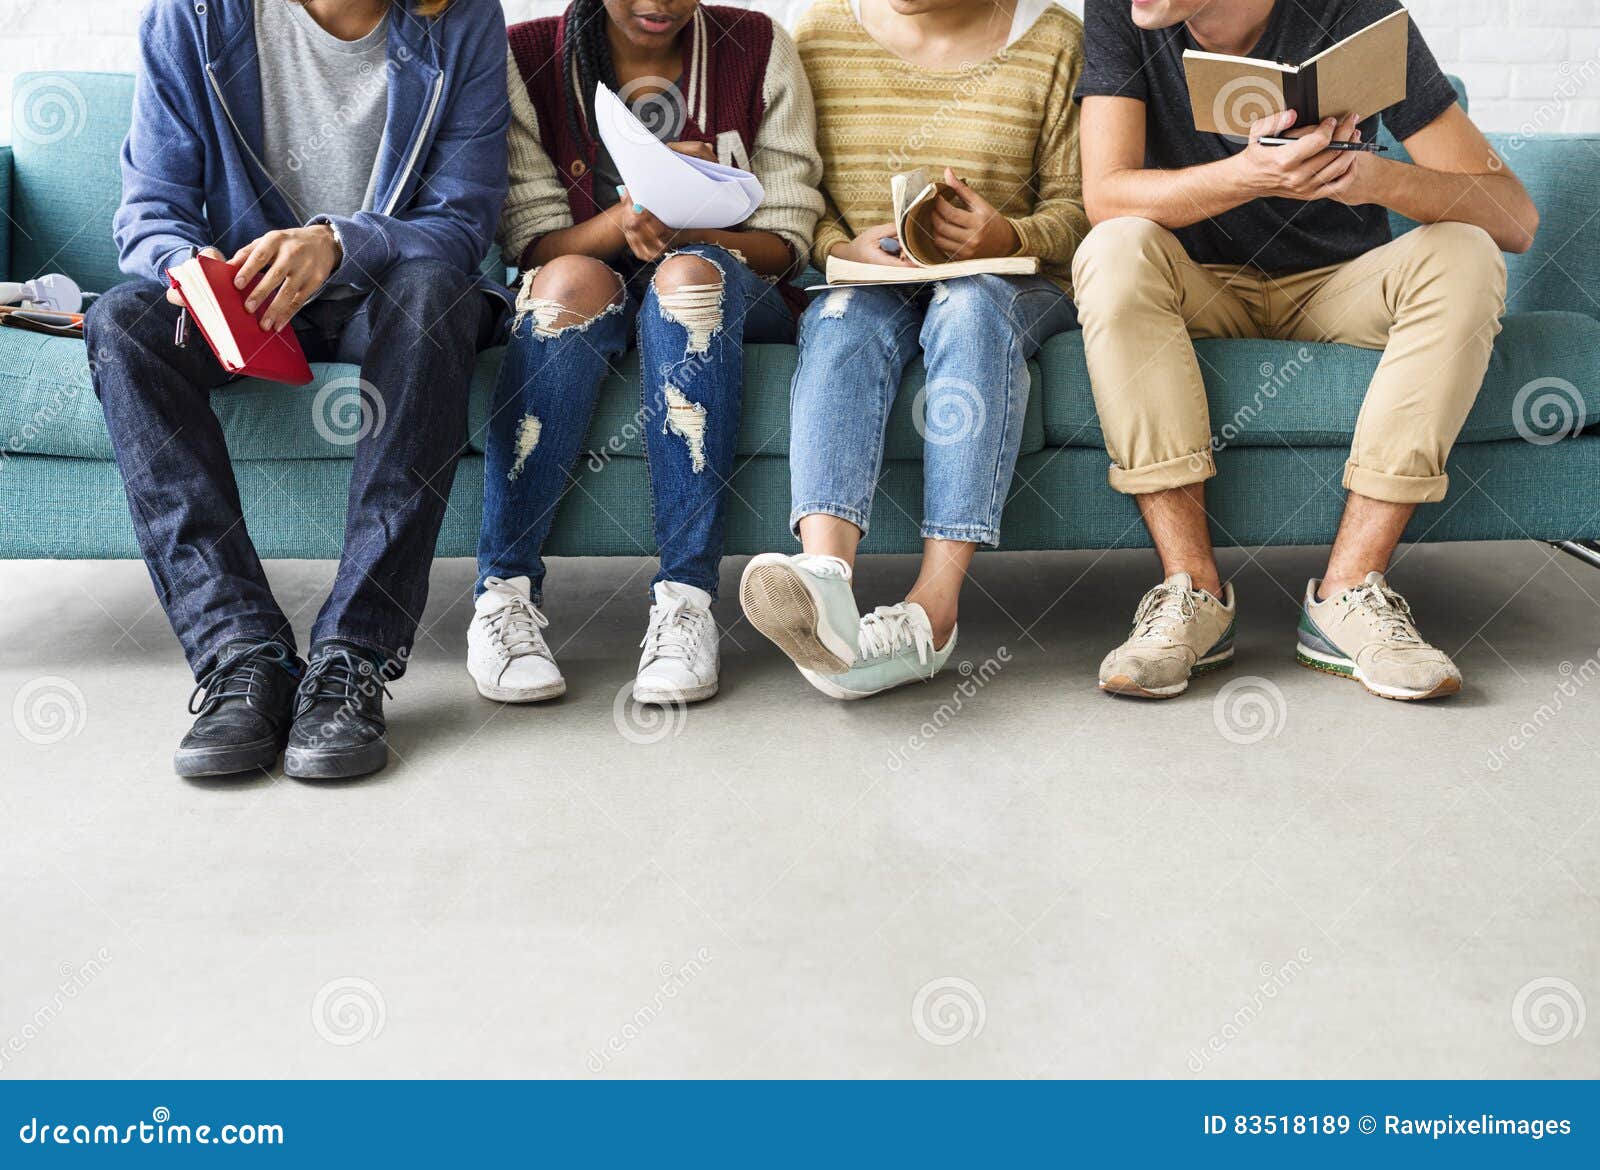 diversity teens hipster friend education concept